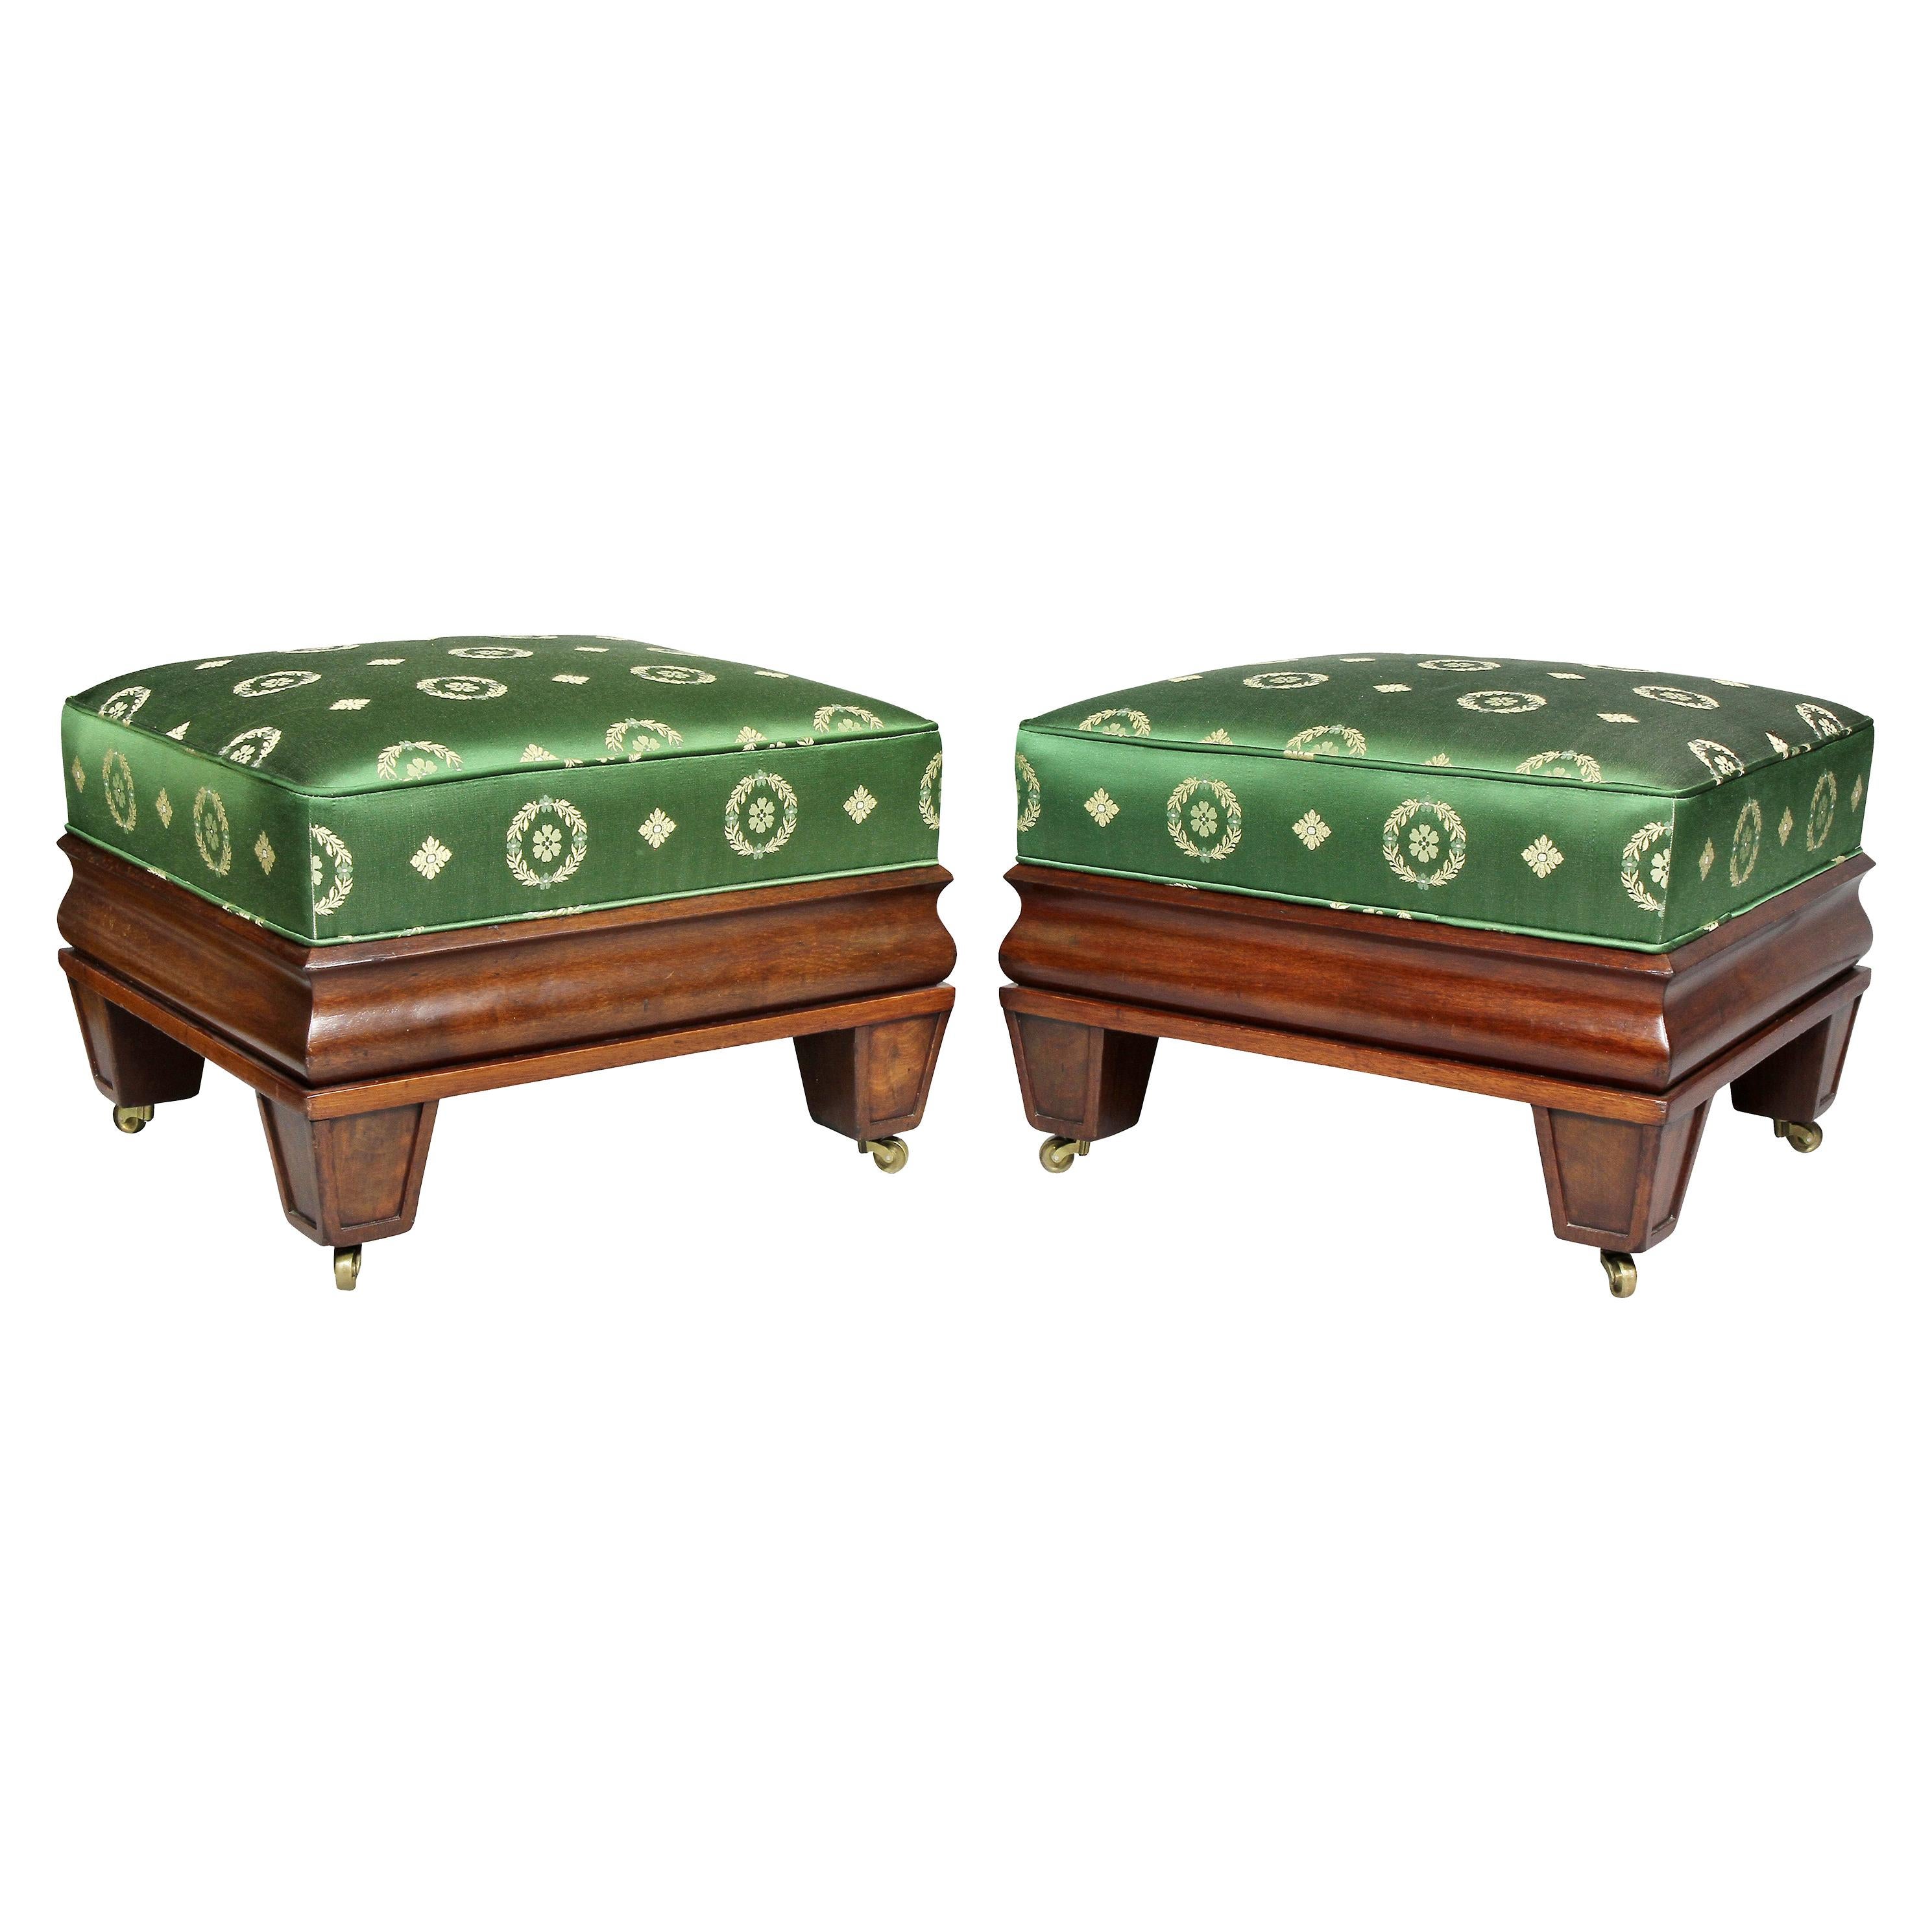 Pair of American Classical Mahogany Footstools